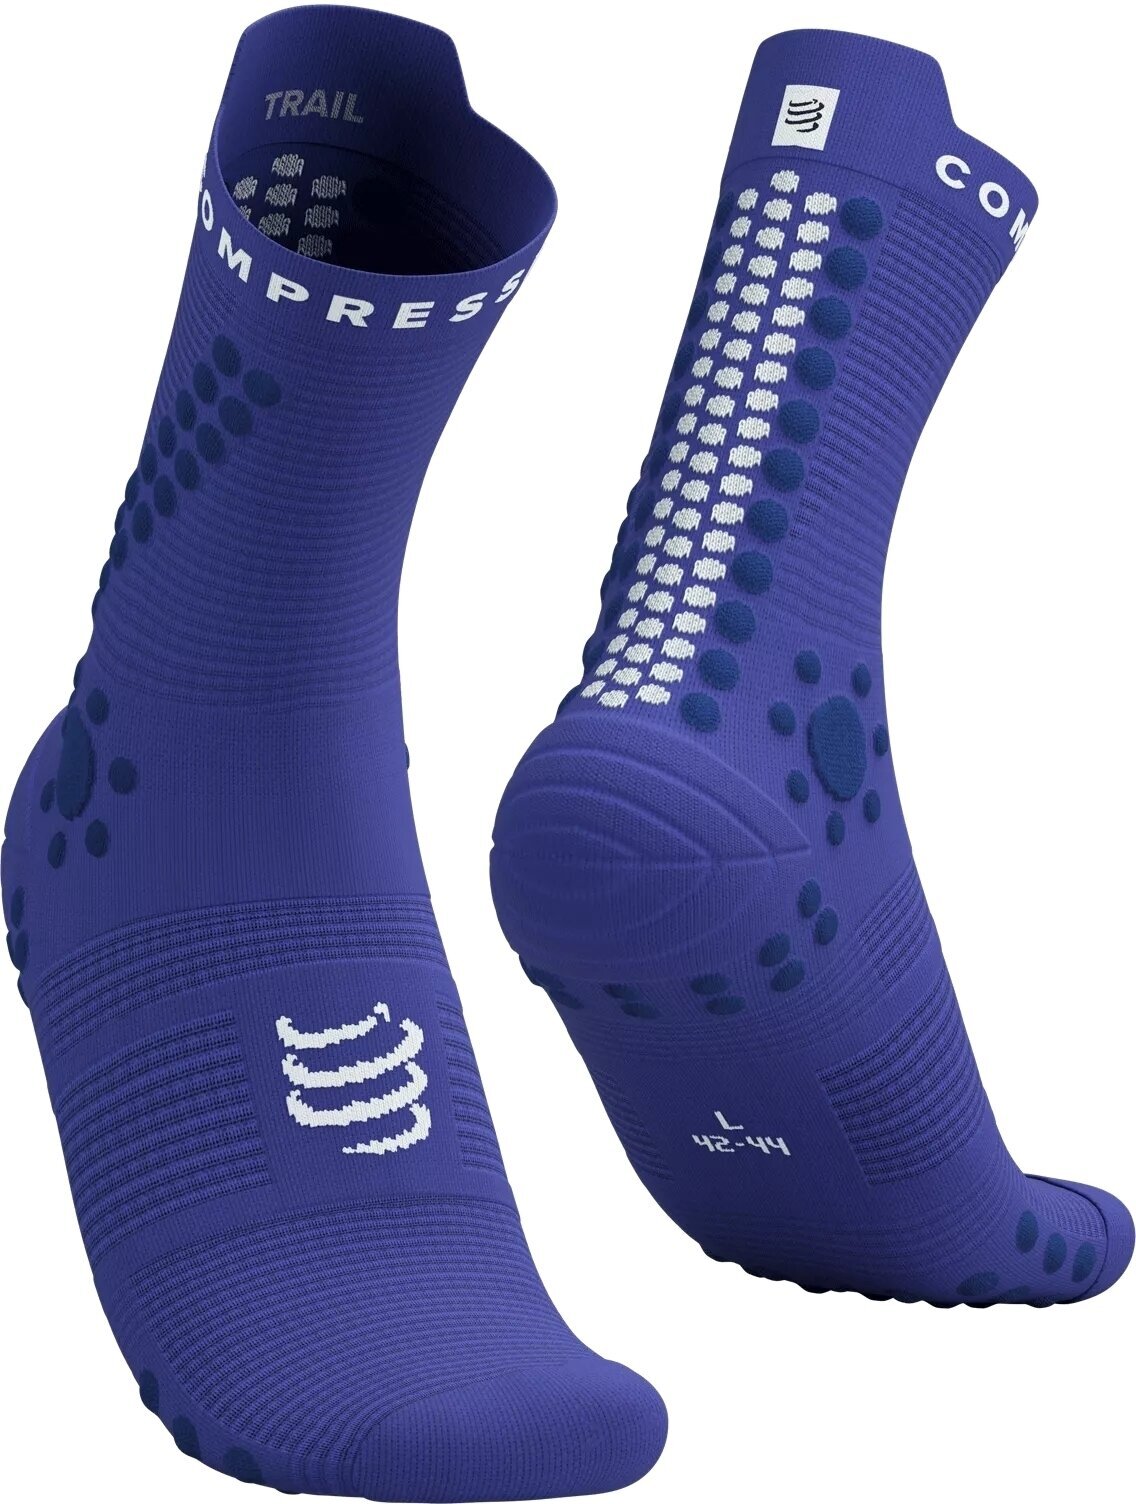 Calcetines para correr Compressport Pro Racing Socks V4.0 Trail Dazzling Blue/Dress Blues/White T4 Calcetines para correr